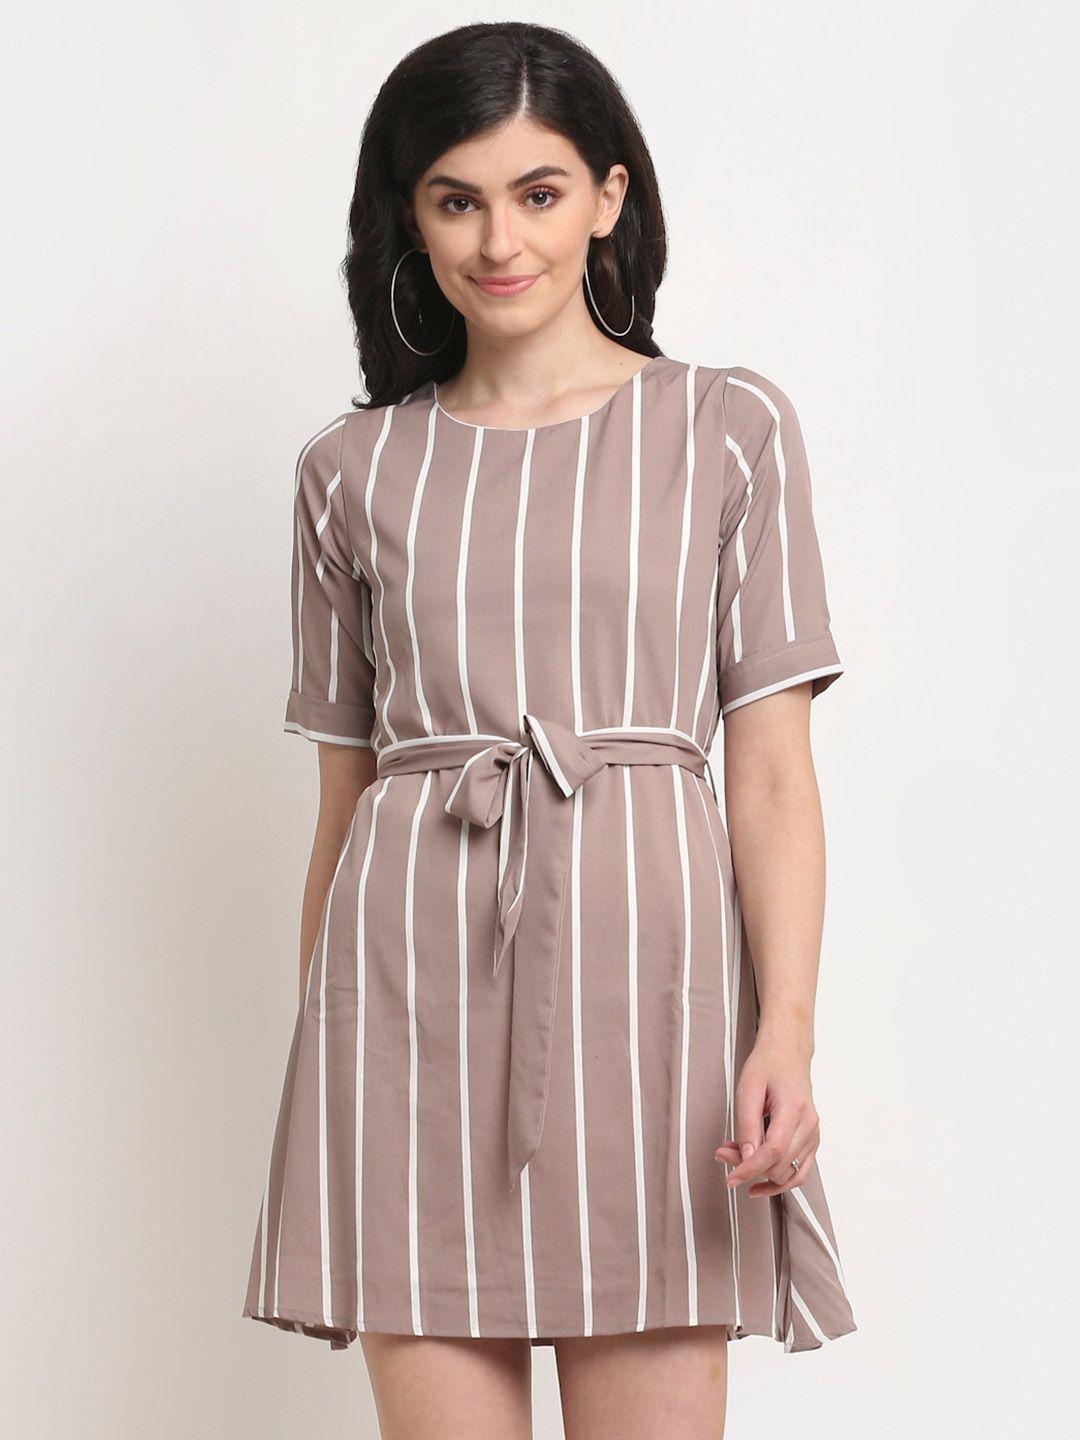 la-zoire-grey-&-white-striped-crepe-a-line-dress